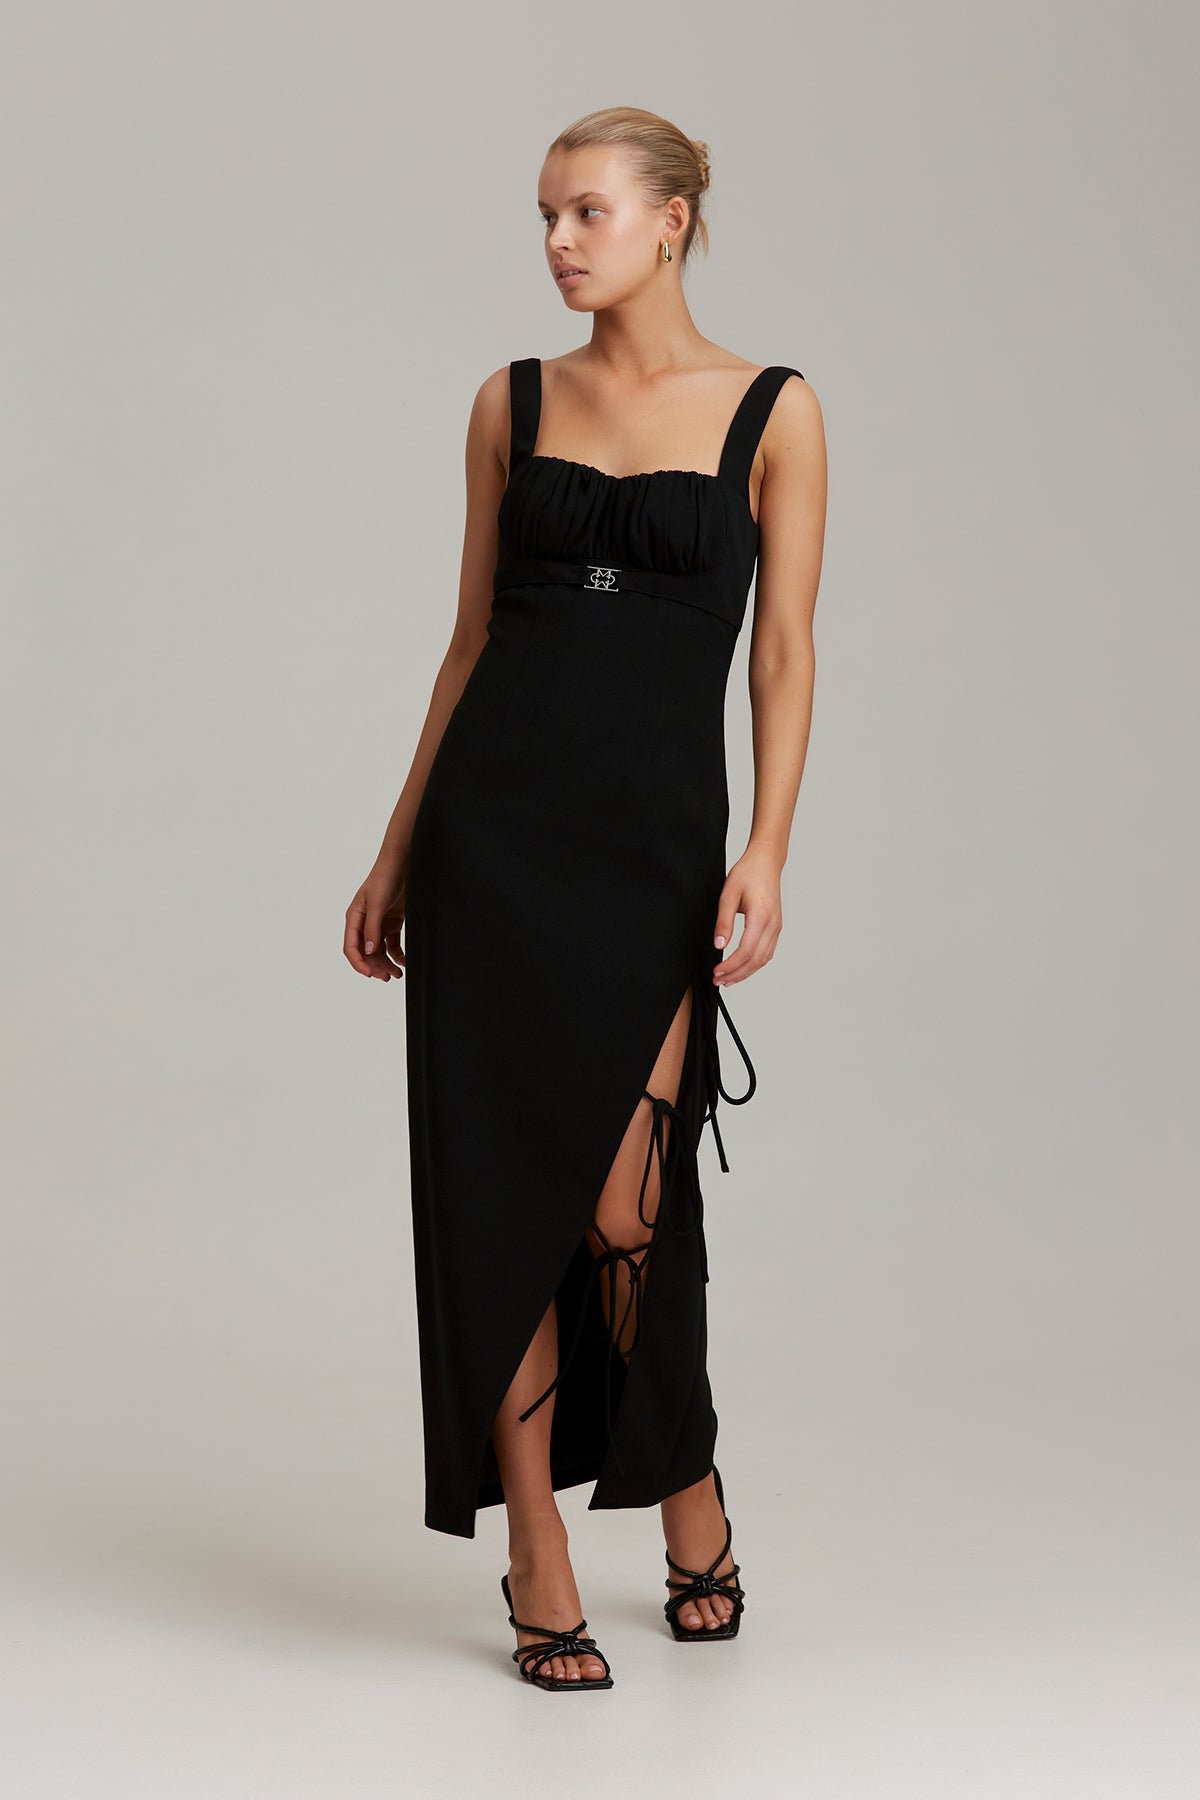 C/MEO Collective - Validate Dress - Black